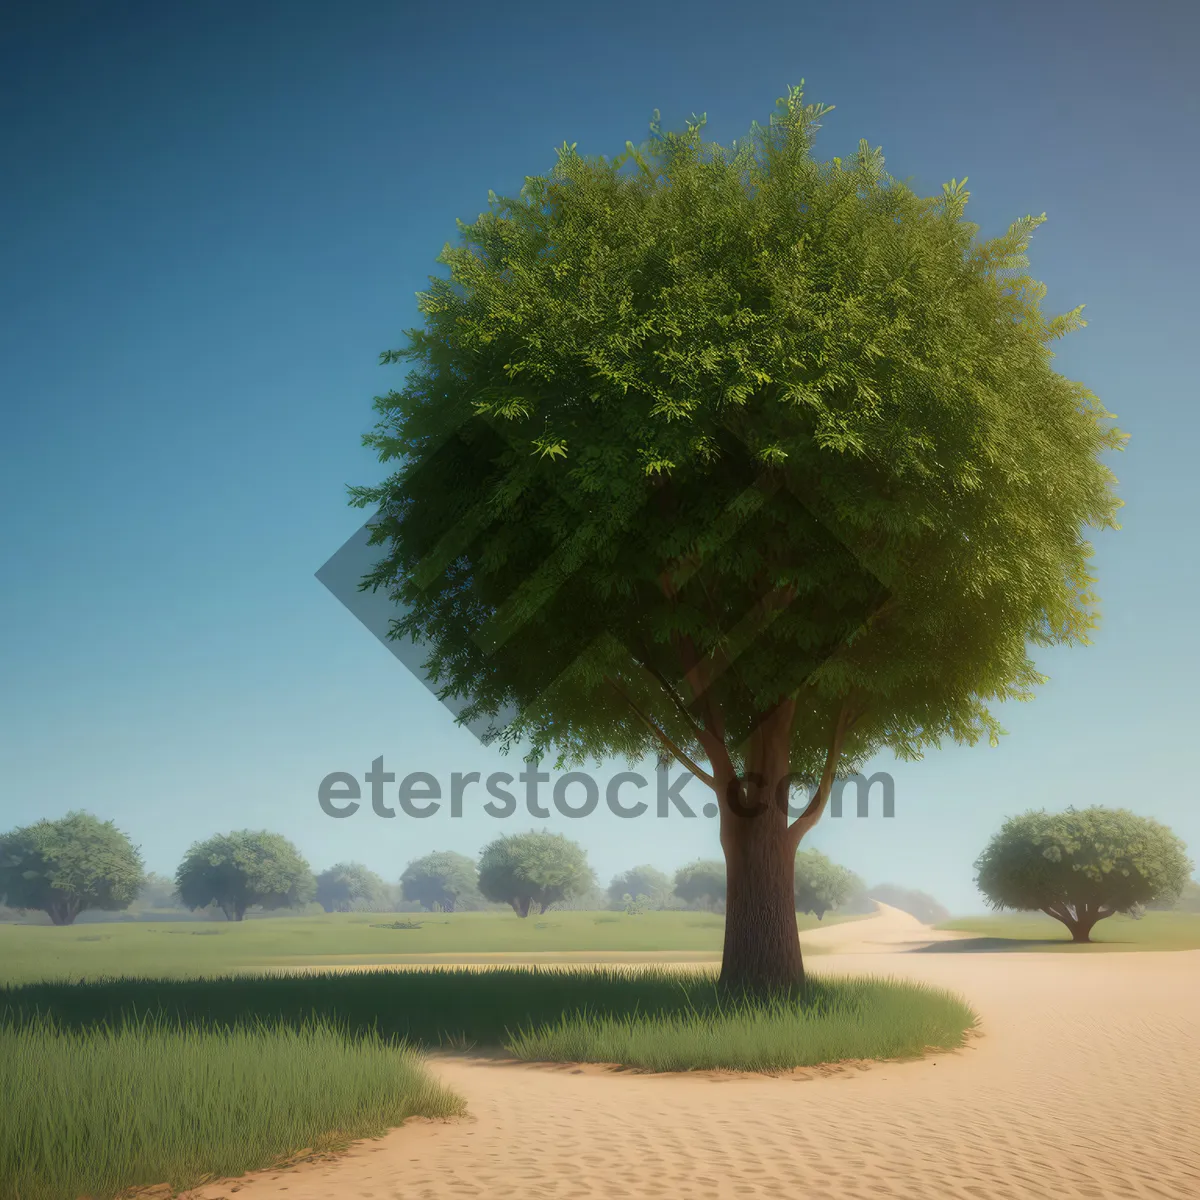 Picture of Rural Oak Tree Overlooking Vast Summer Landscape